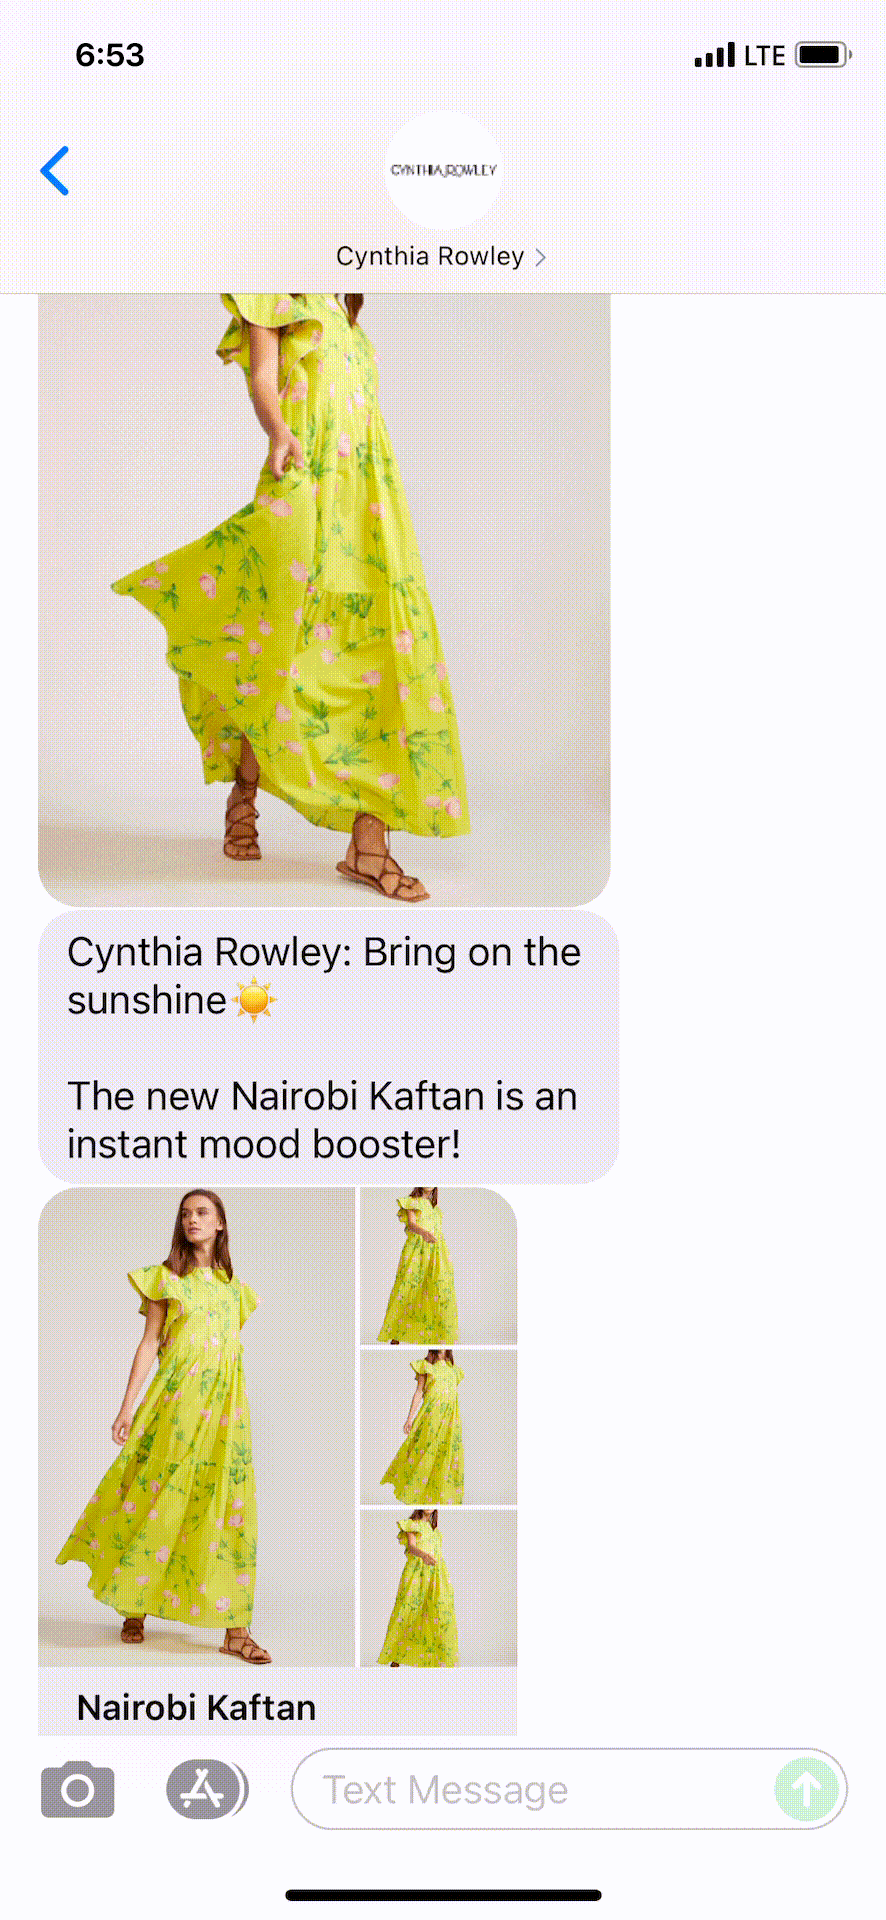 Cynthia-Rowley-Text-Message-Marketing-Example-08.09.2021